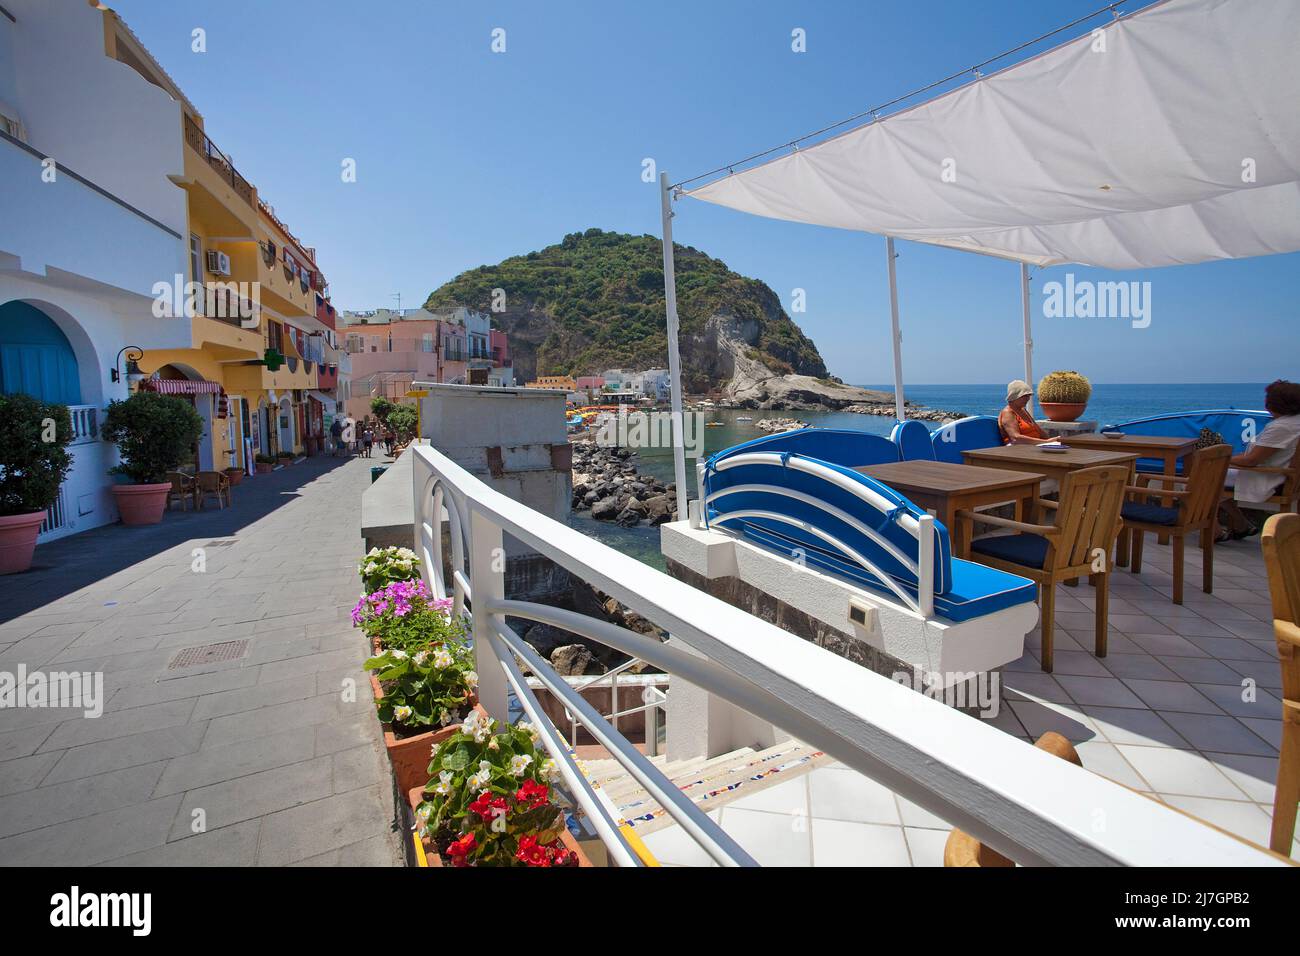 Strandcafé mit Meerblick im malerischen Fischerdorf Sant' Angelo, Insel Ischia, Golf von Neapel, Italien, Mittelmeer, Europa Stockfoto